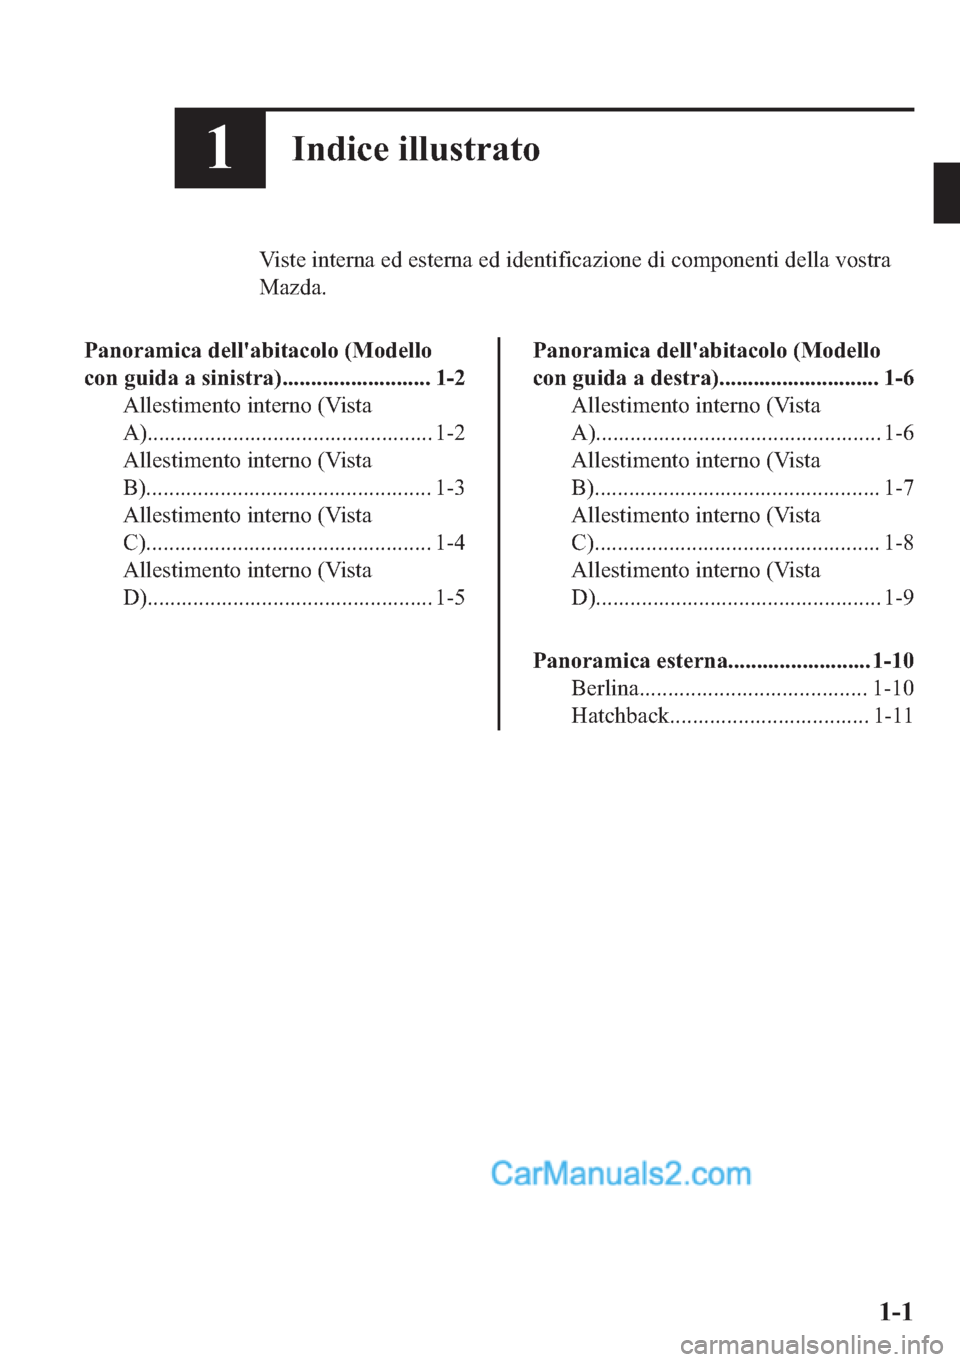 MAZDA MODEL 2 2019  Manuale del proprietario (in Italian) ��,�Q�G�L�F�H��L�O�O�X�V�W�U�D�W�R
�9�L�V�W�H��L�Q�W�H�U�Q�D��H�G��H�V�W�H�U�Q�D��H�G��L�G�H�Q�W�L�I�L�F�D�]�L�R�Q�H��G�L��F�R�P�S�R�Q�H�Q�W�L��G�H�O�O�D��Y�R�V�W�U�D
�0�D�]�G�D�
�3�D�Q�R�